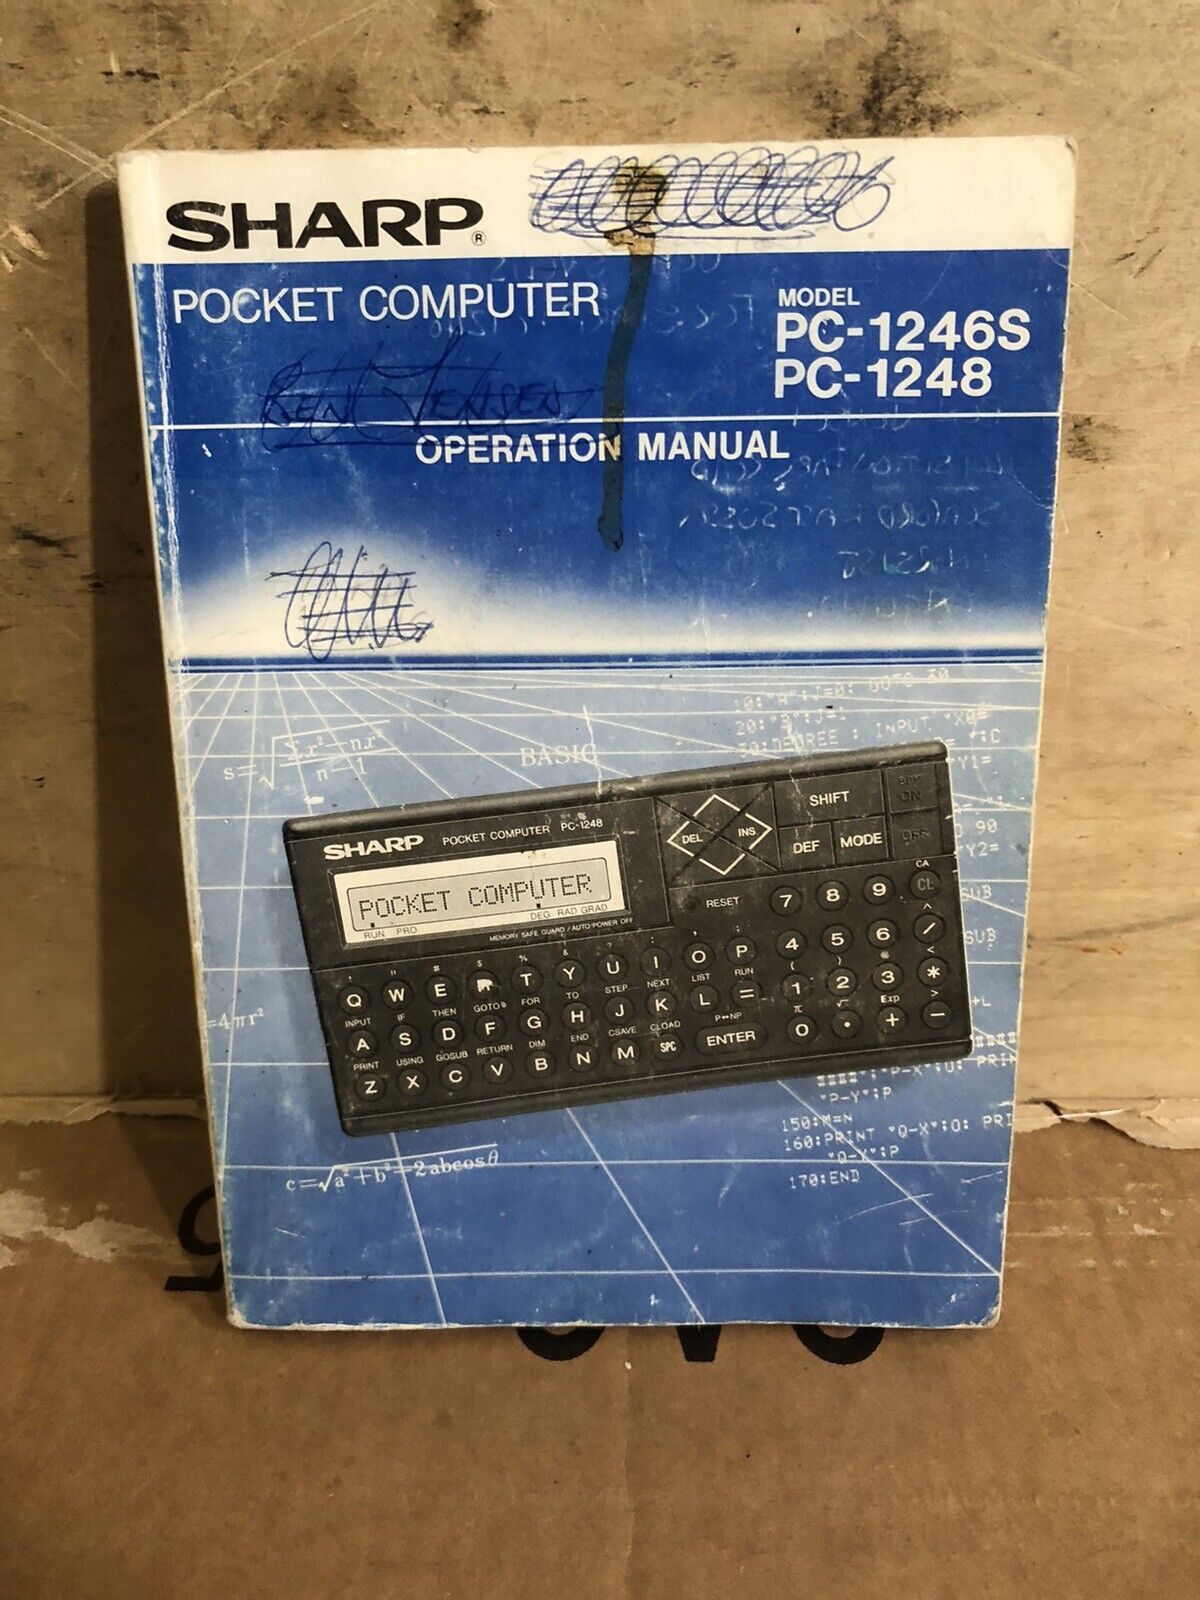 Sharp Pocket Computer Model PC-1246S PC-1248 Operation Manual - READ DESCRIPTION